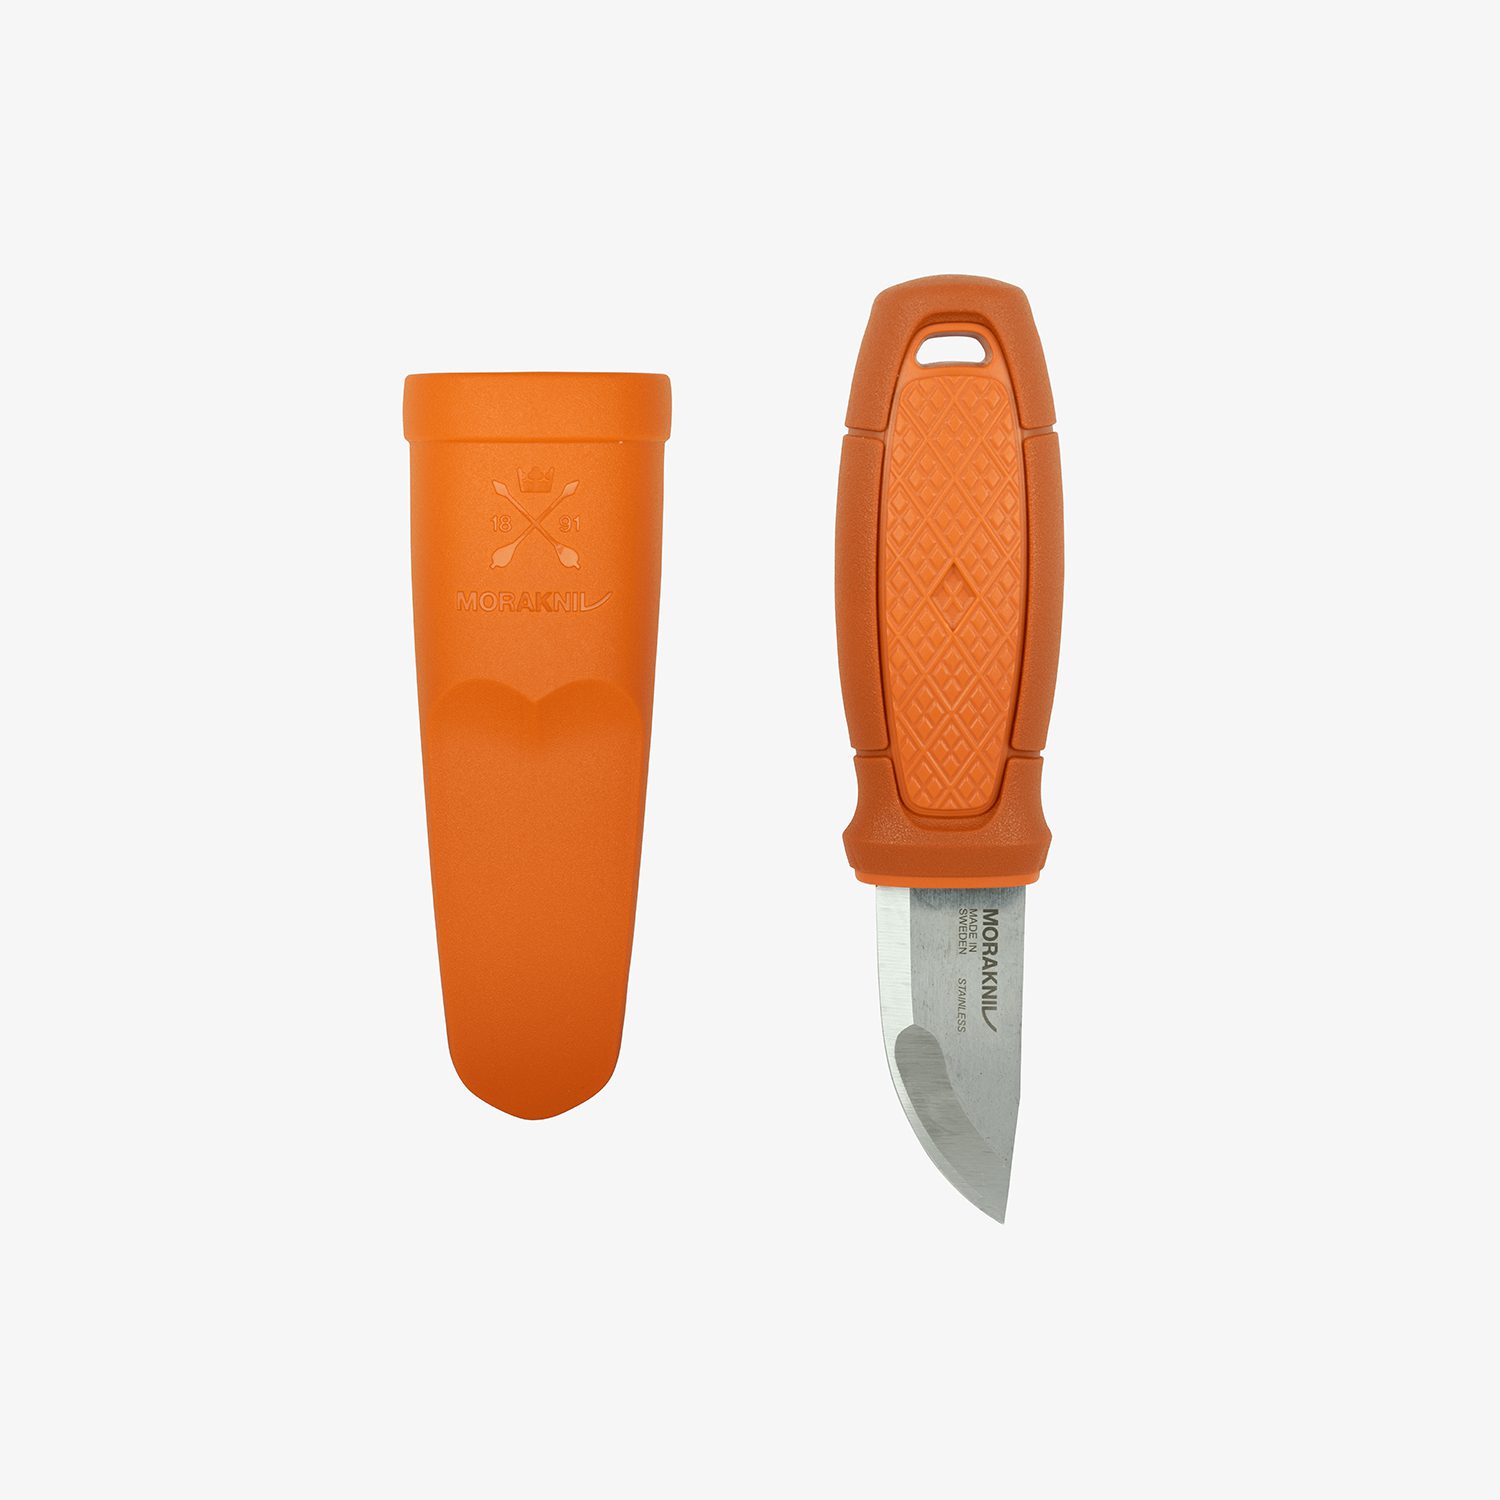 Mora Eldris Knife - Burnt Orange